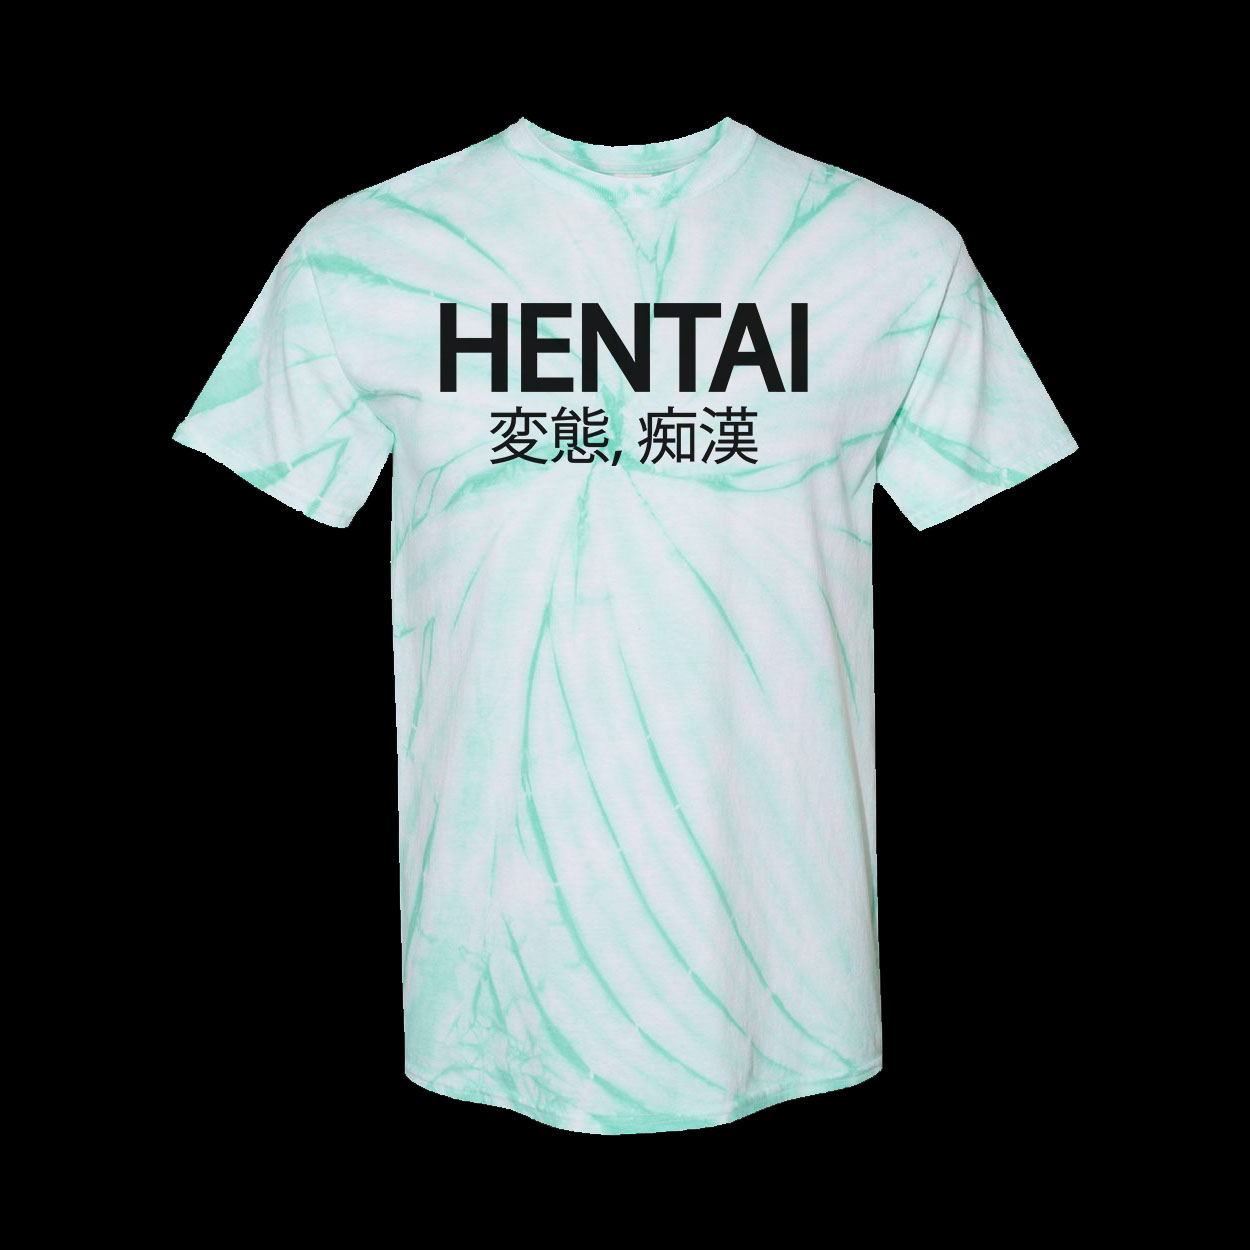 Accidie Hentai Mint Tie Dye T-shirt